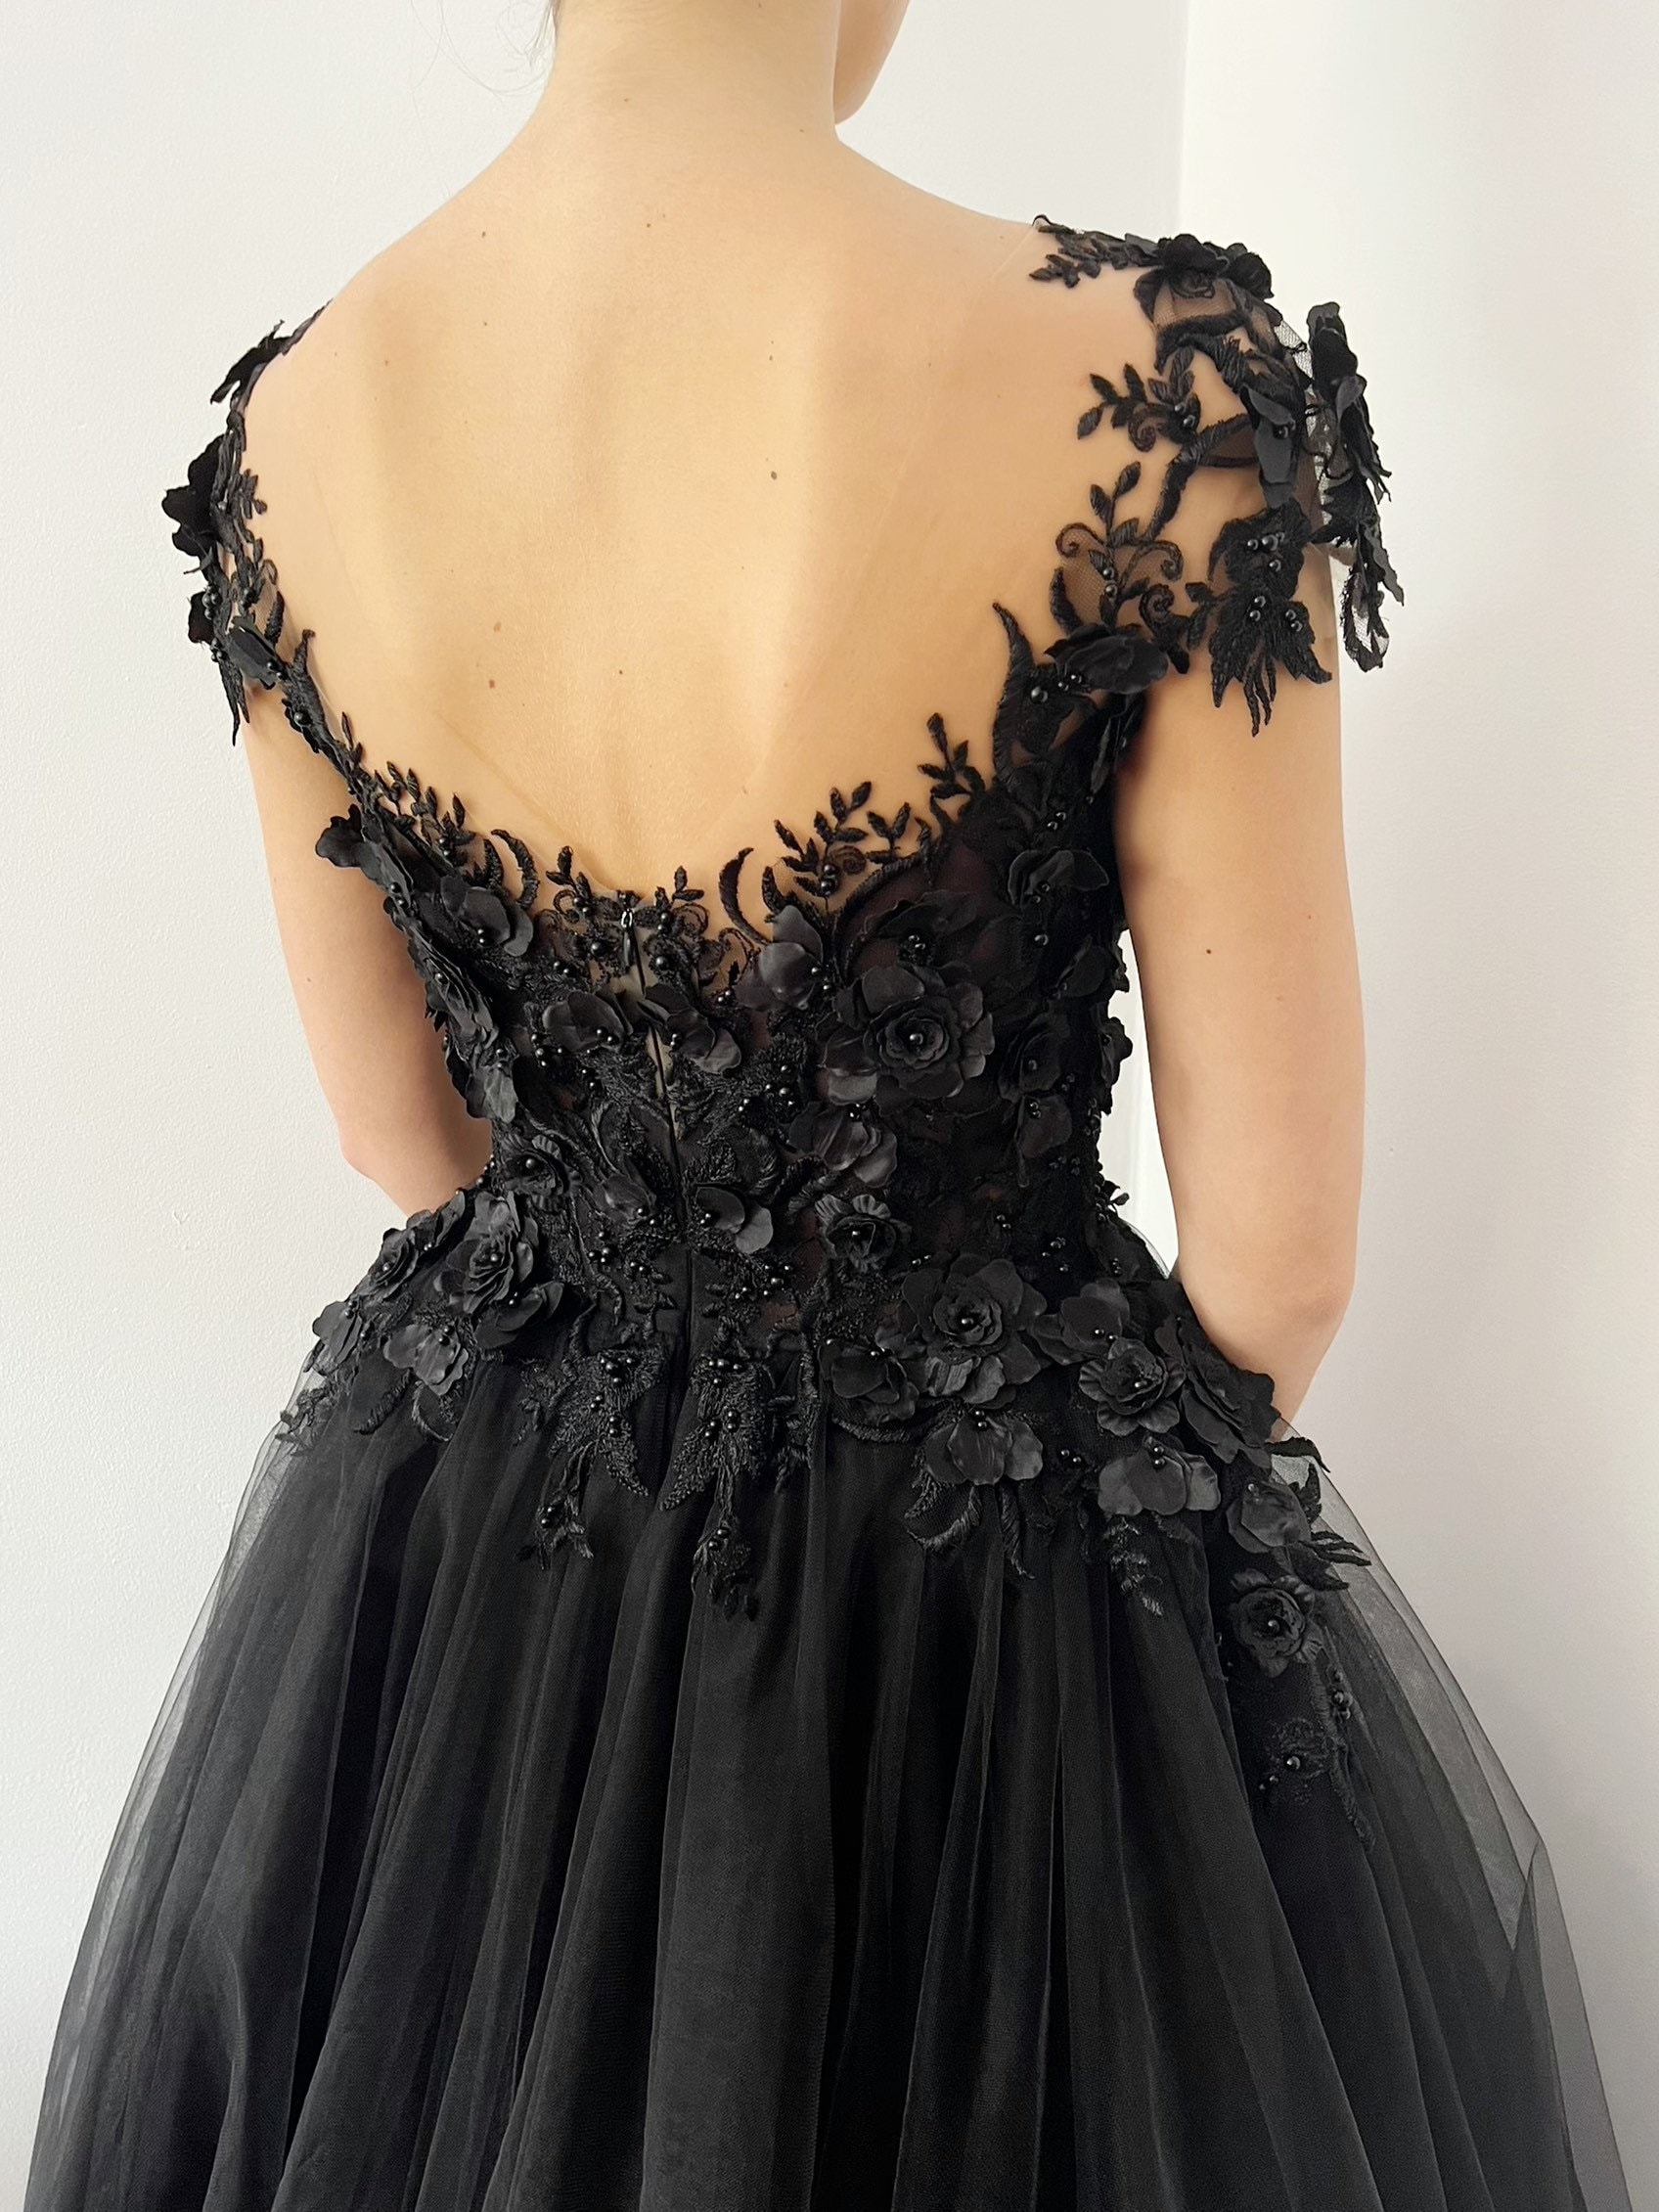 Black gothic 3D beaded floral lace applique tulle dress | Etsy